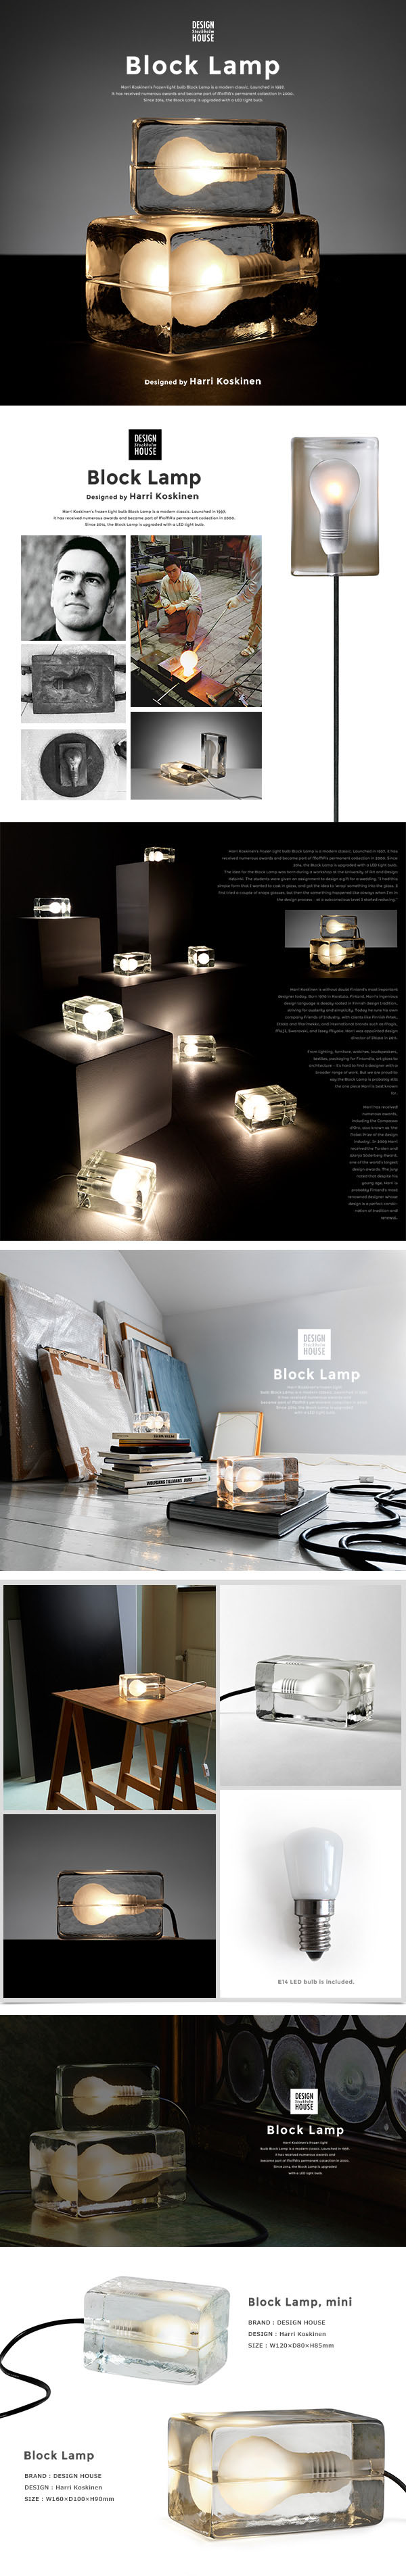 Design House Stockholm/ブロックランプ スモーク Block Lamp Smoke 照明 MoMA/ランプ/ライト/ガラス/北欧/デザインハウス  ストックホルム stockholm-blocklampsmoke ShinwaShop 通販 